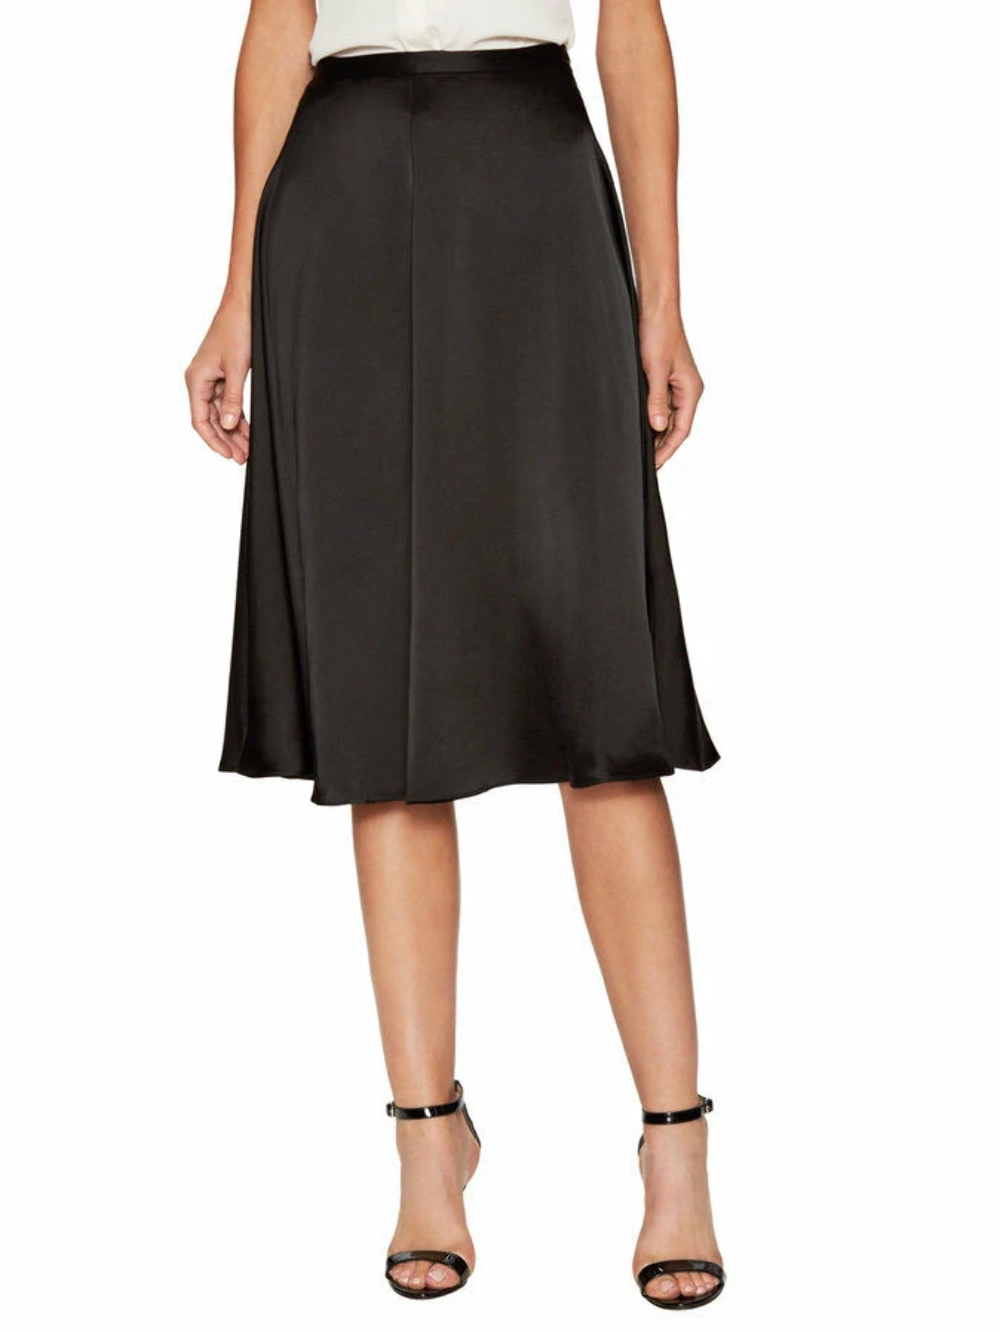 Jill Stuart Women's A-Line Knee Length Black Satin Cocktail Skirt - 8